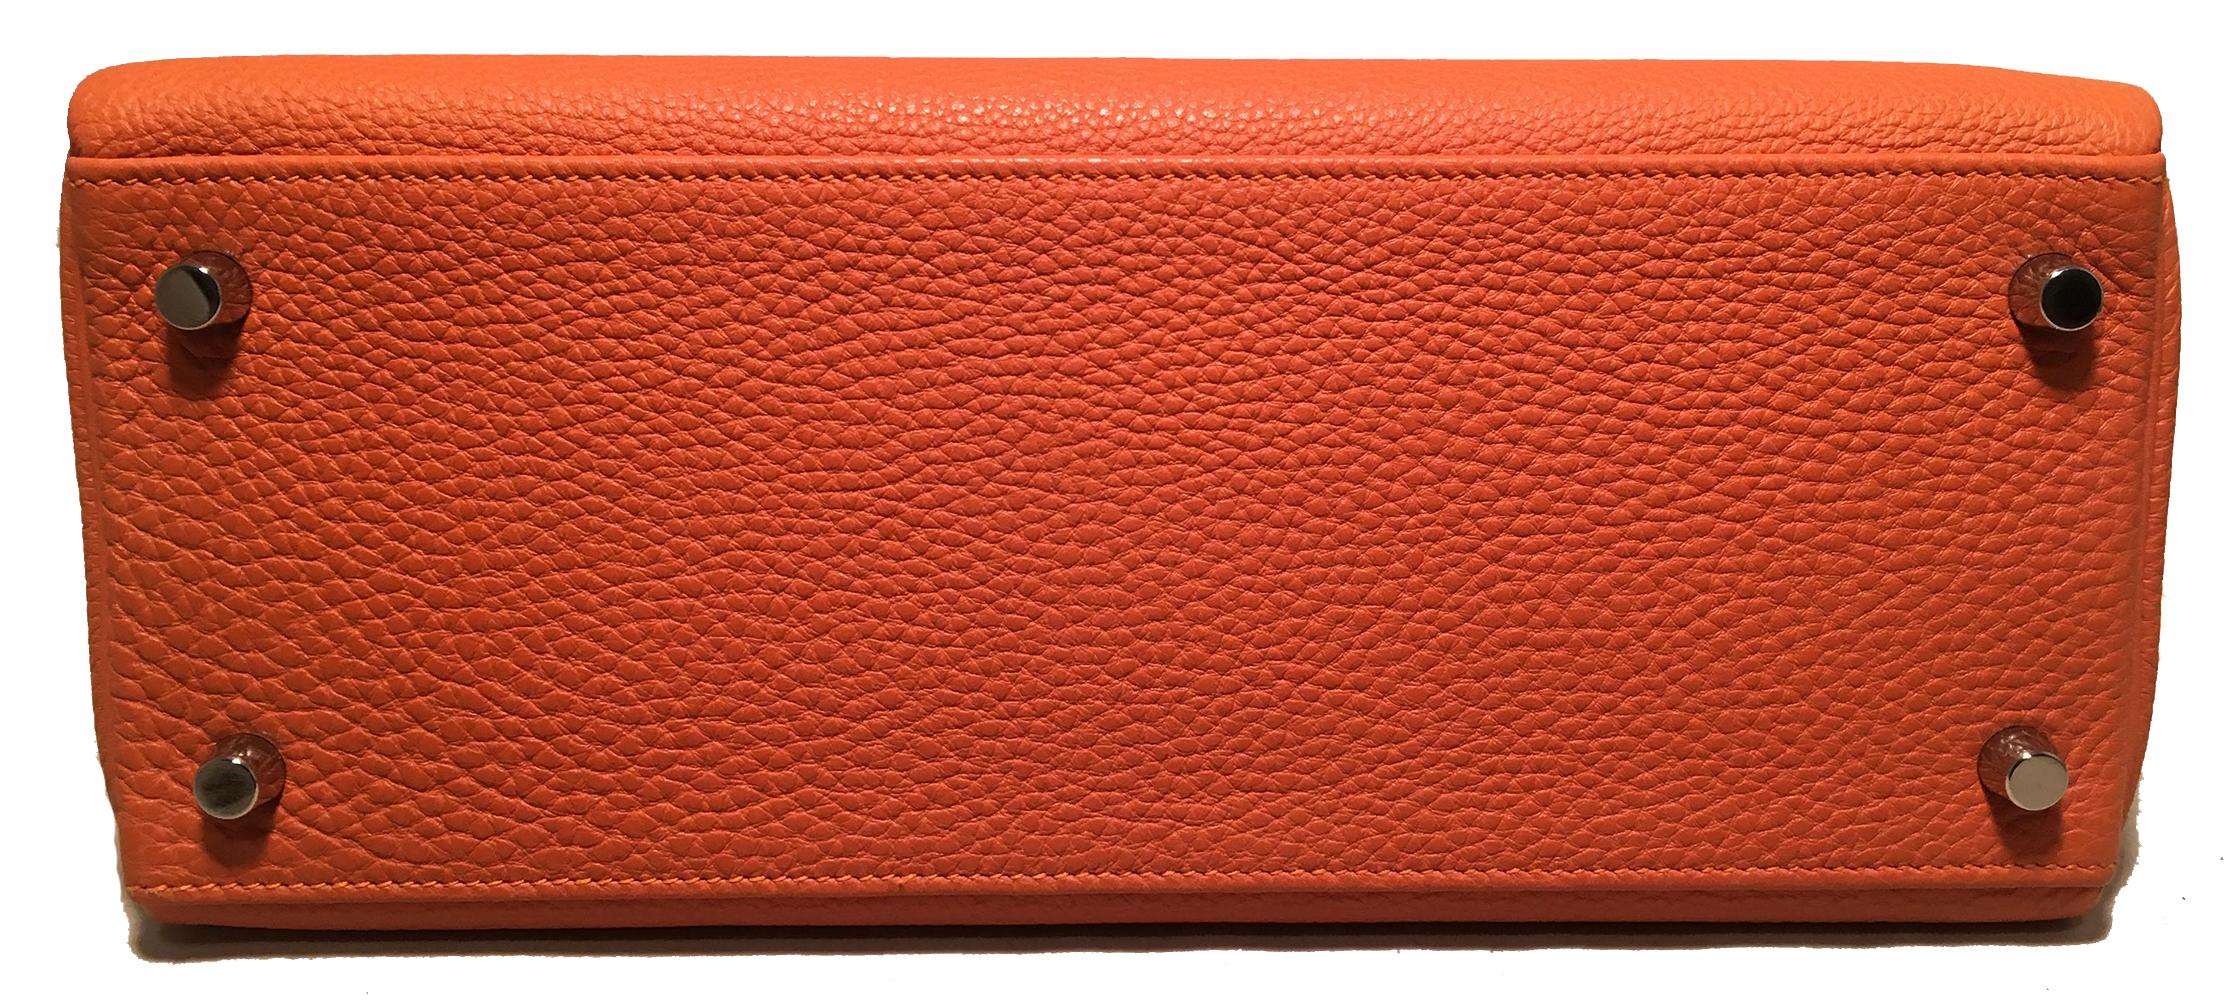 Hermes Orange Togo Leather PHW 28cm Kelly Bag 1